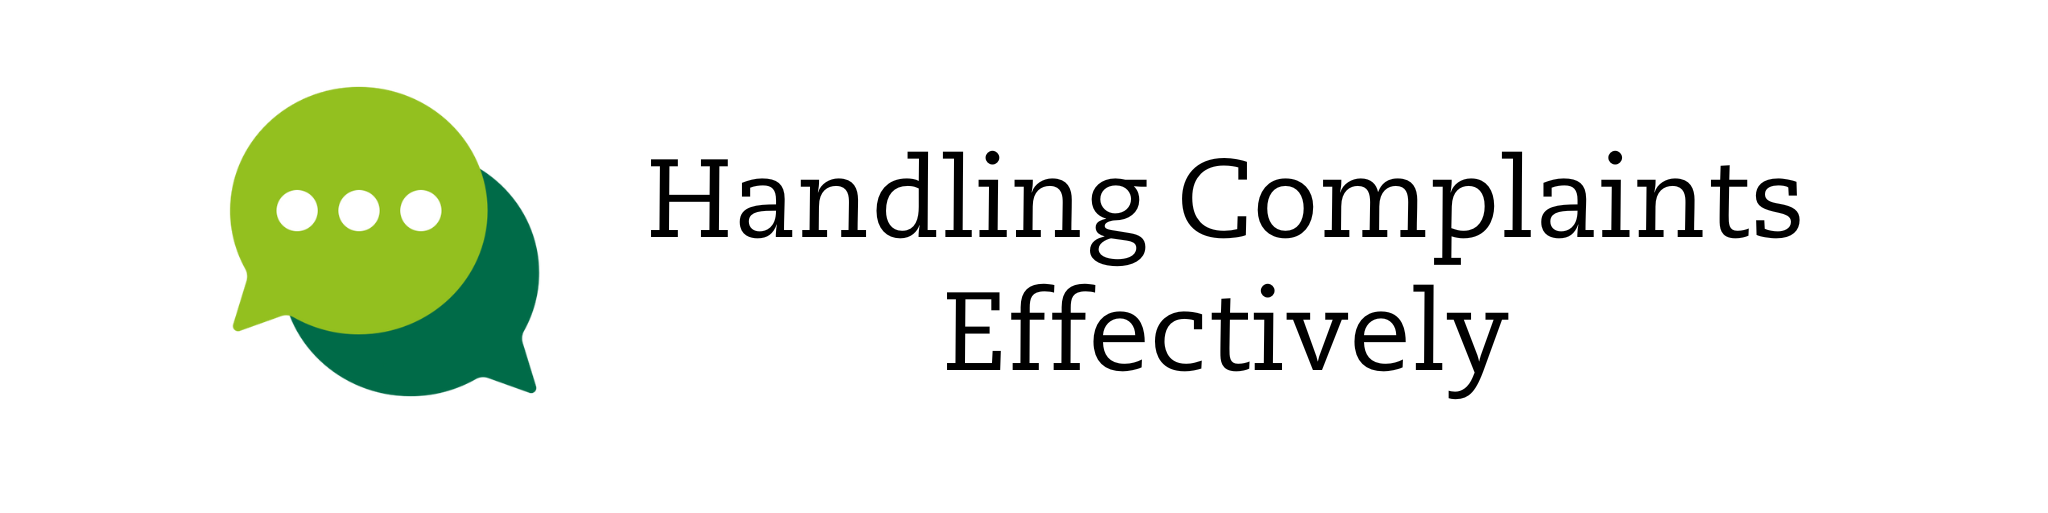 Handling Complaints Effectively Landing Page Banner